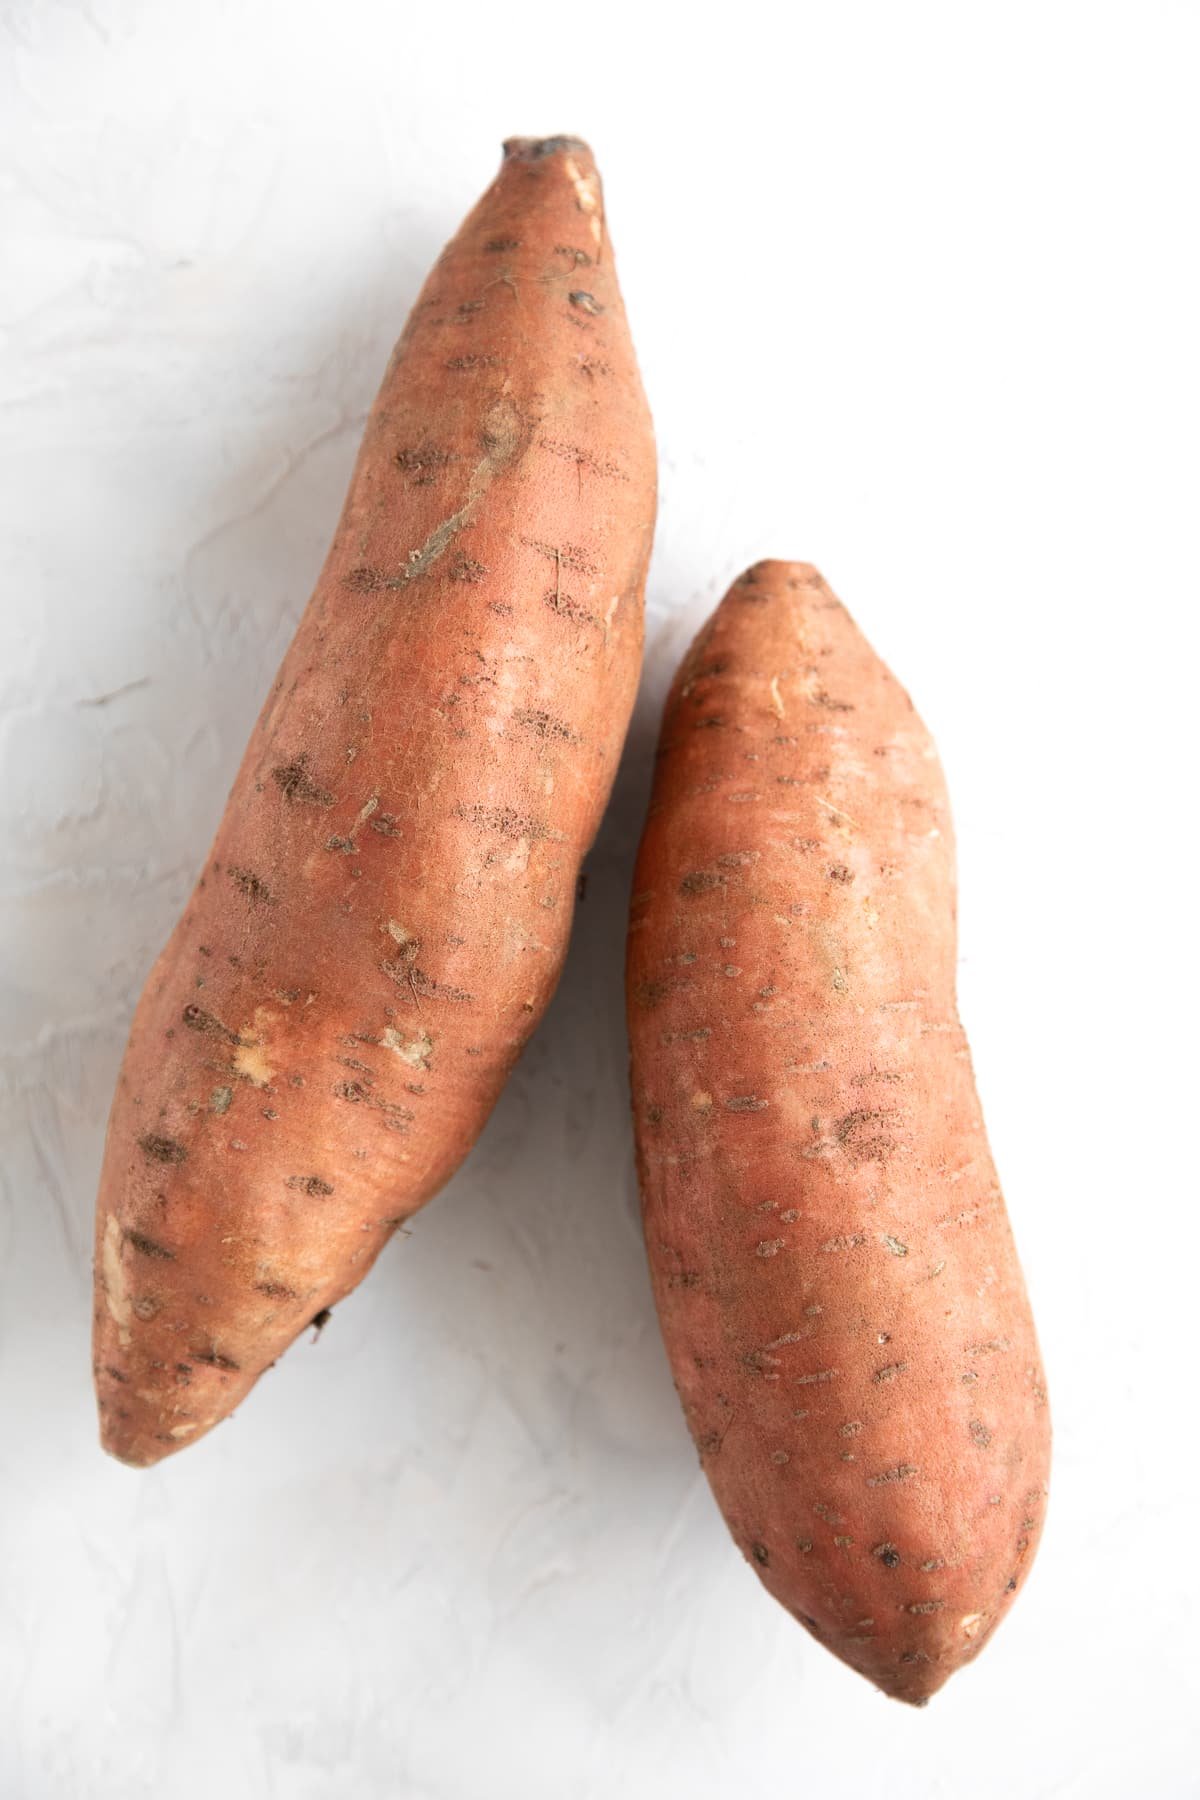 Two large sweet potatoes.